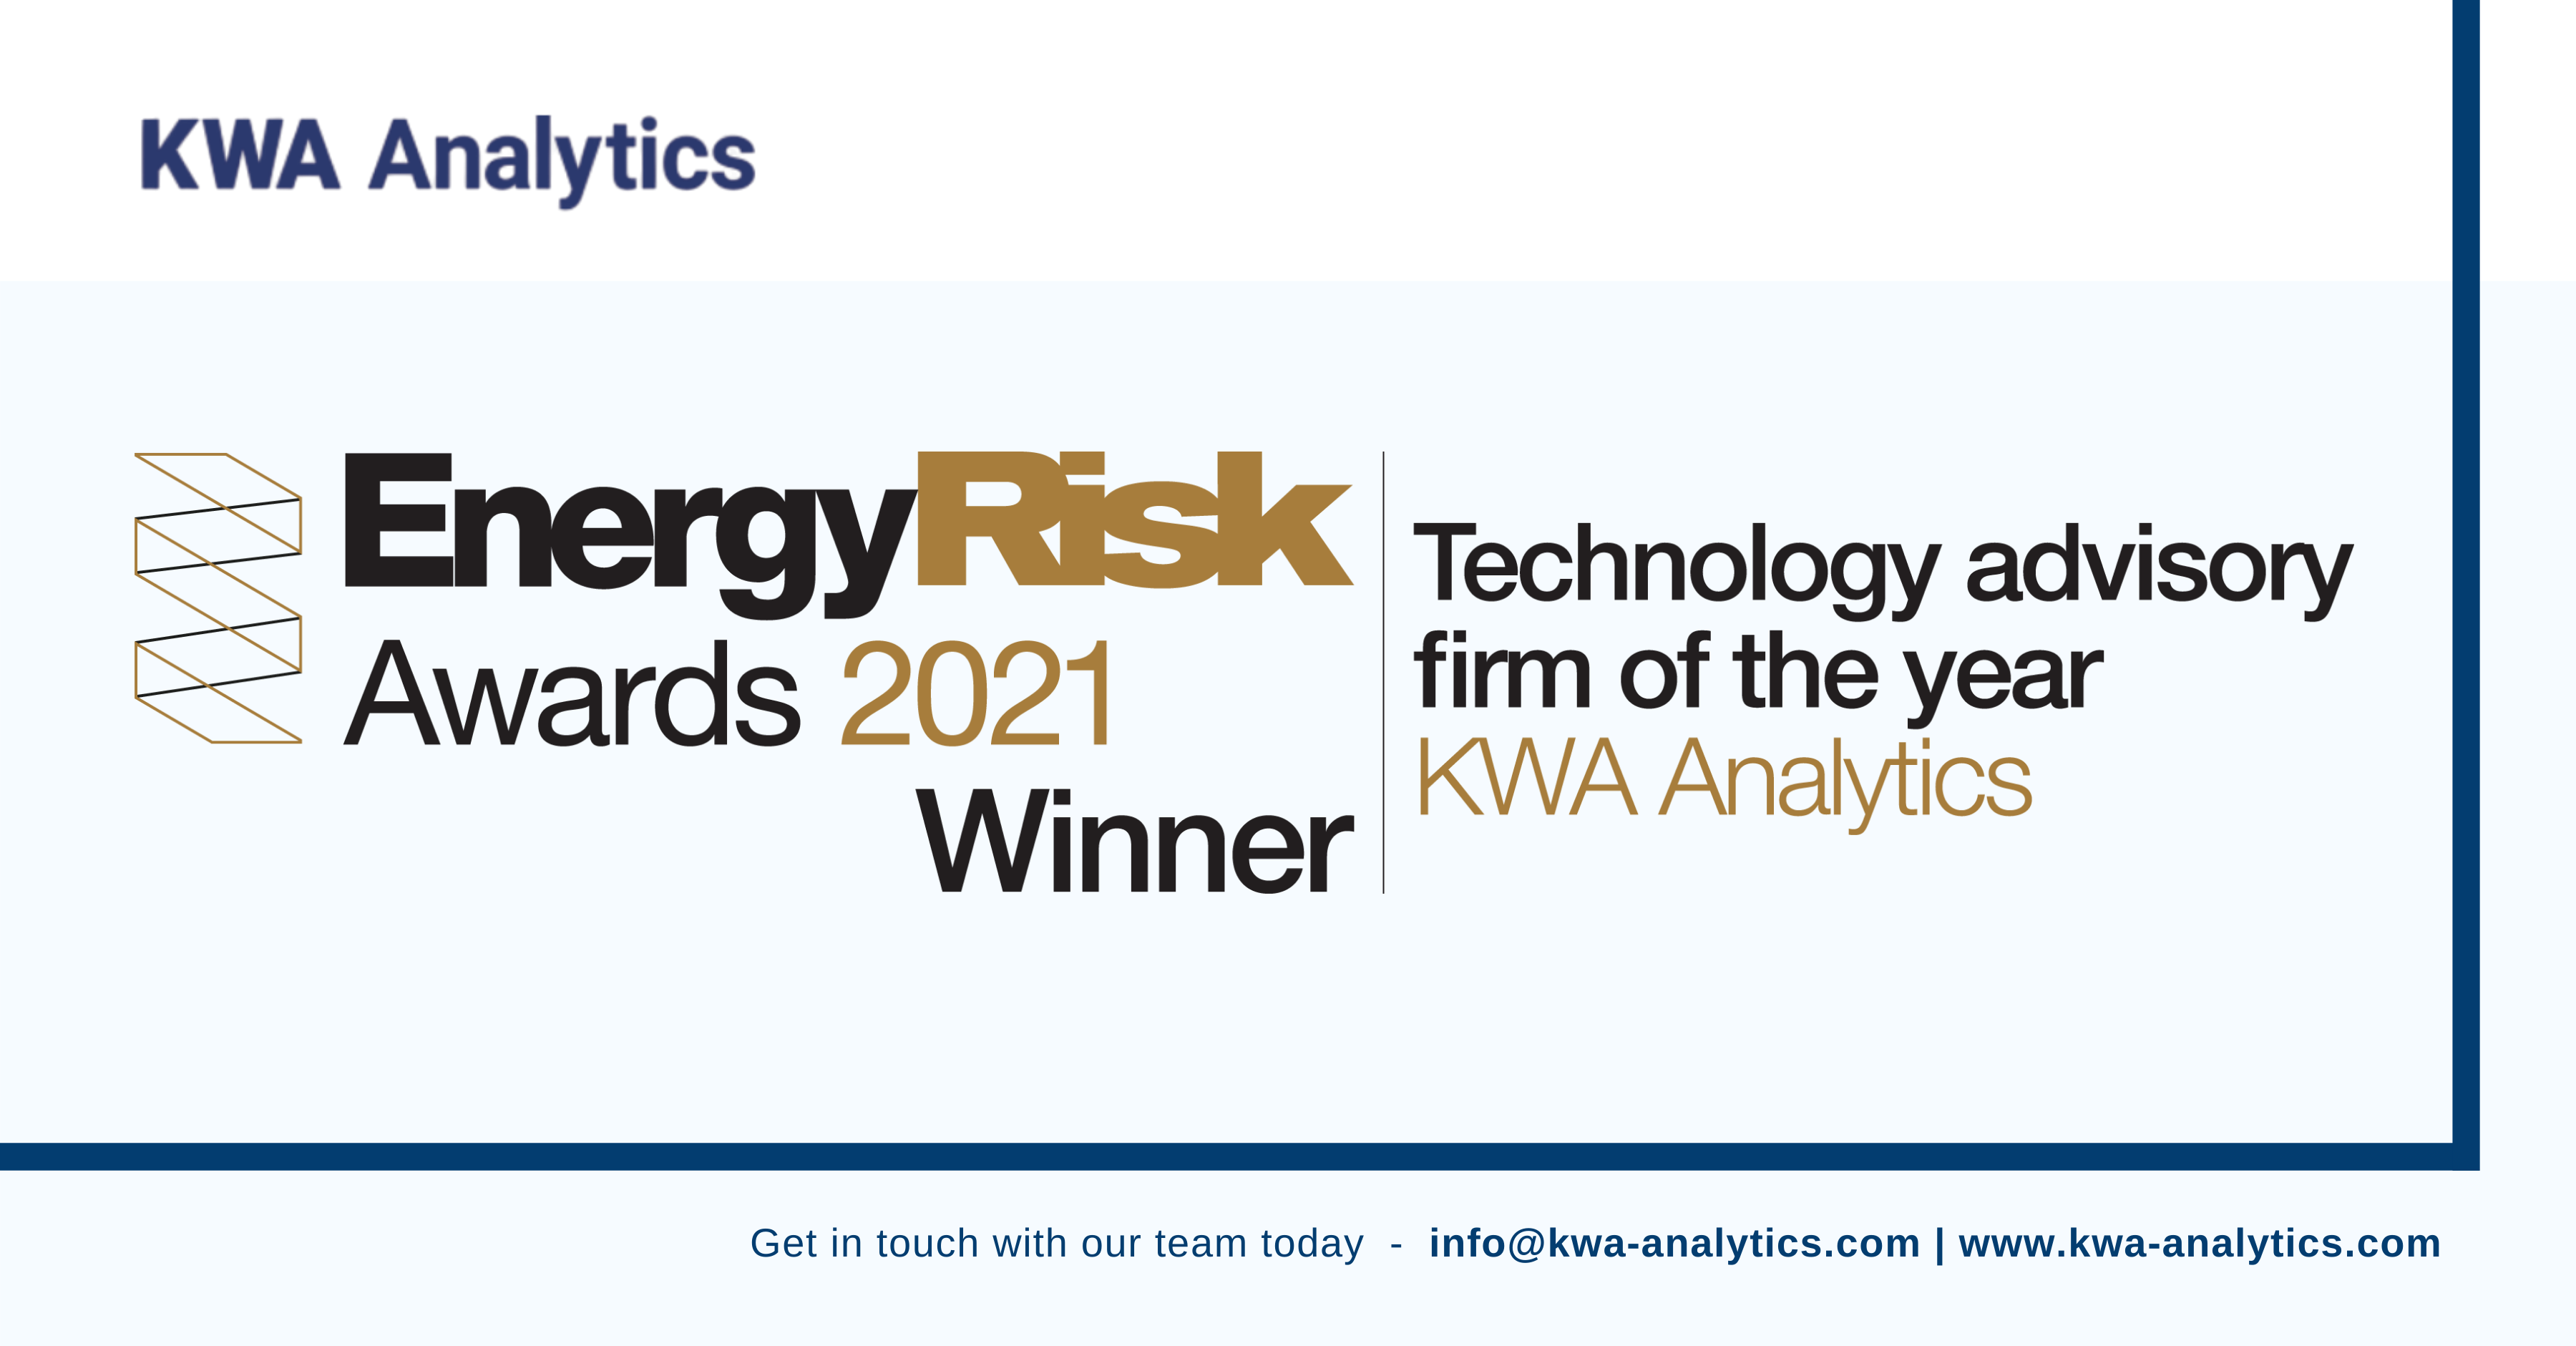 KWA Analytics Win Technology Advisory Firm of the Year 2021